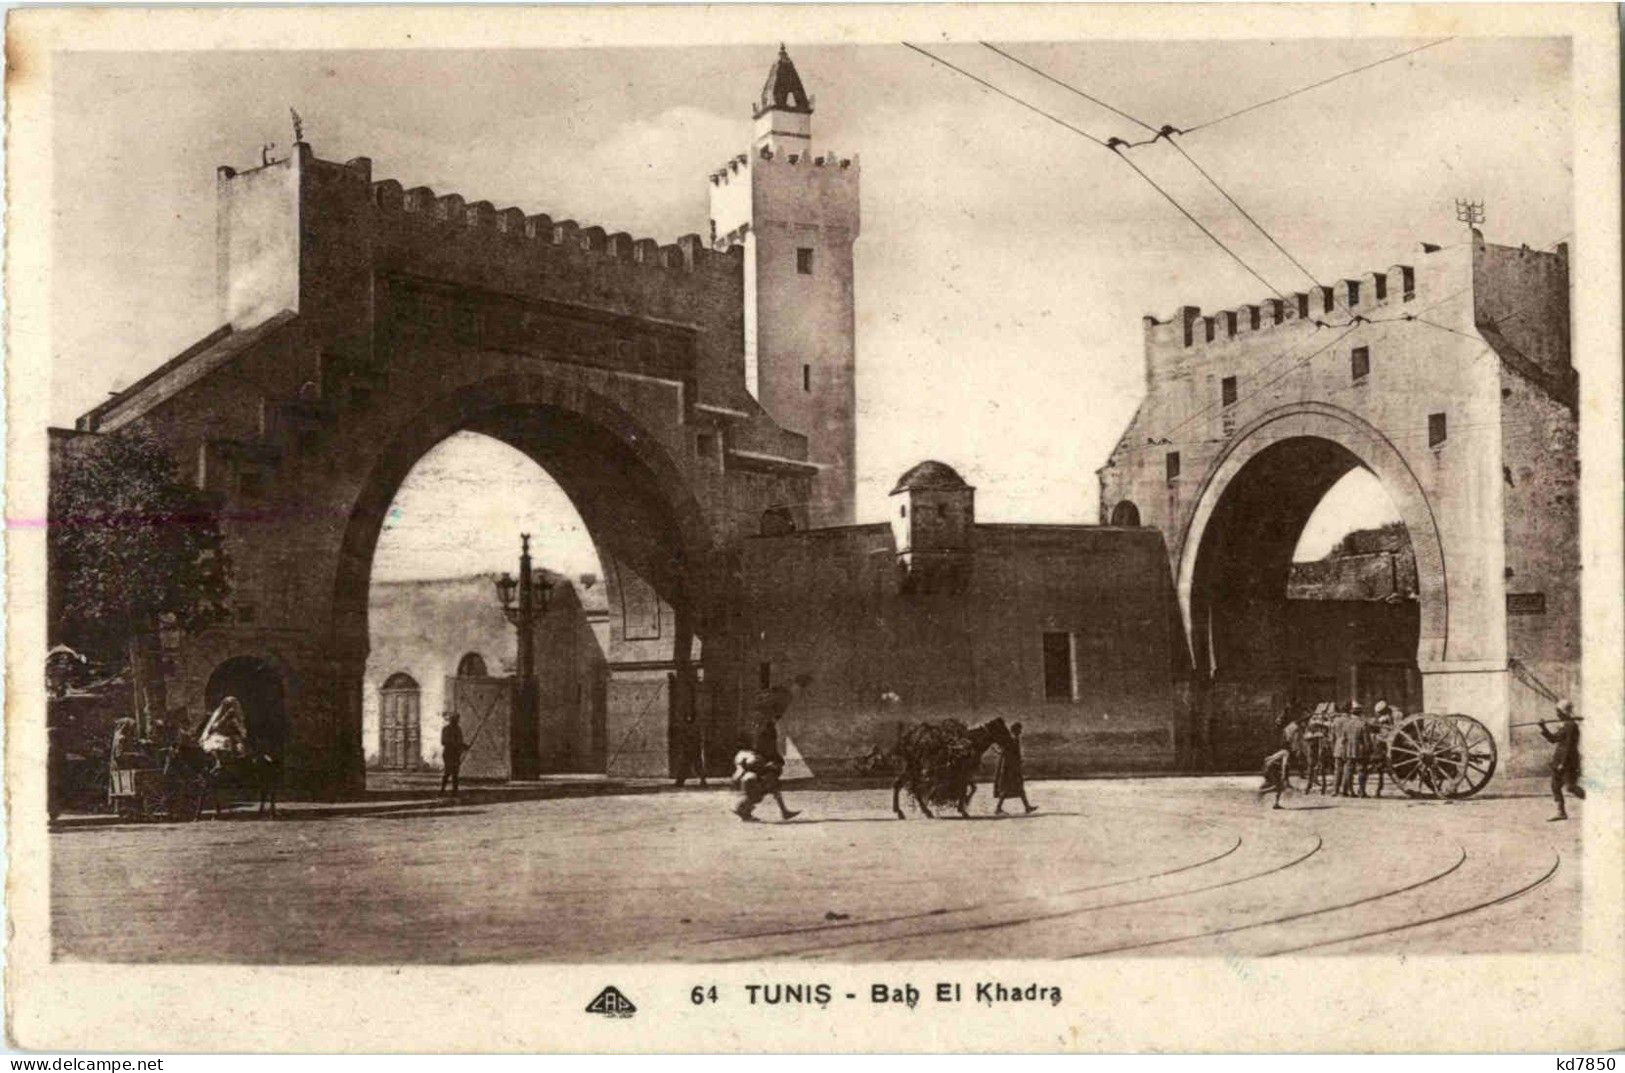 Tunis - Bab El Khadra - Tunisia